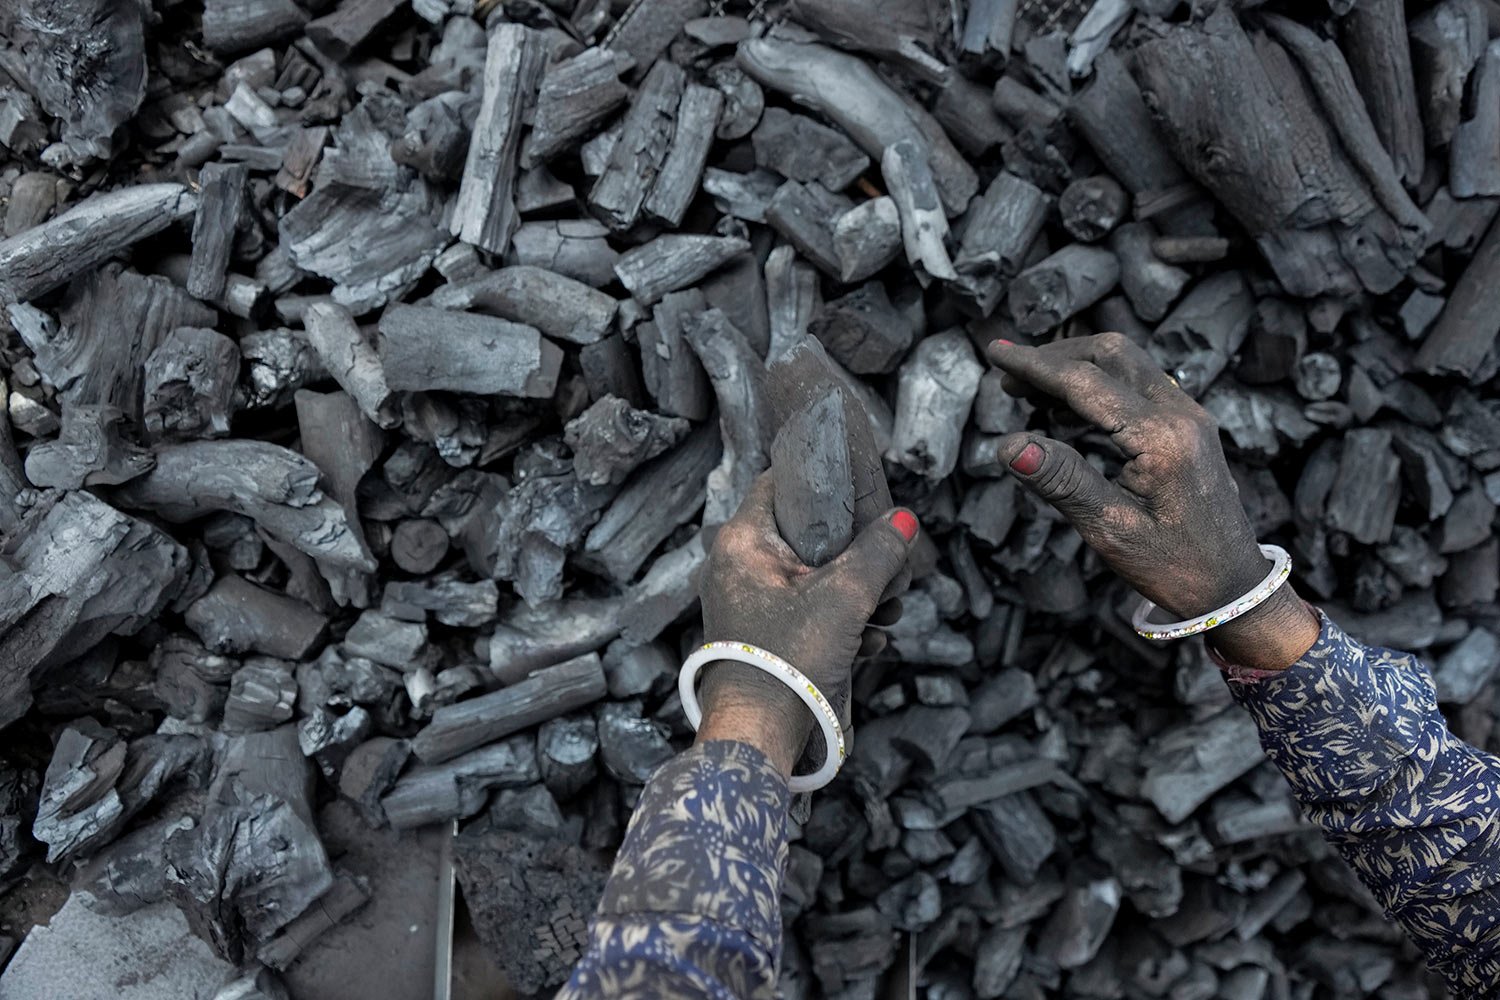  A woman works at a coal depot in Ahmedabad, India, Monday, May 2, 2022.  (AP Photo/Ajit Solanki) 